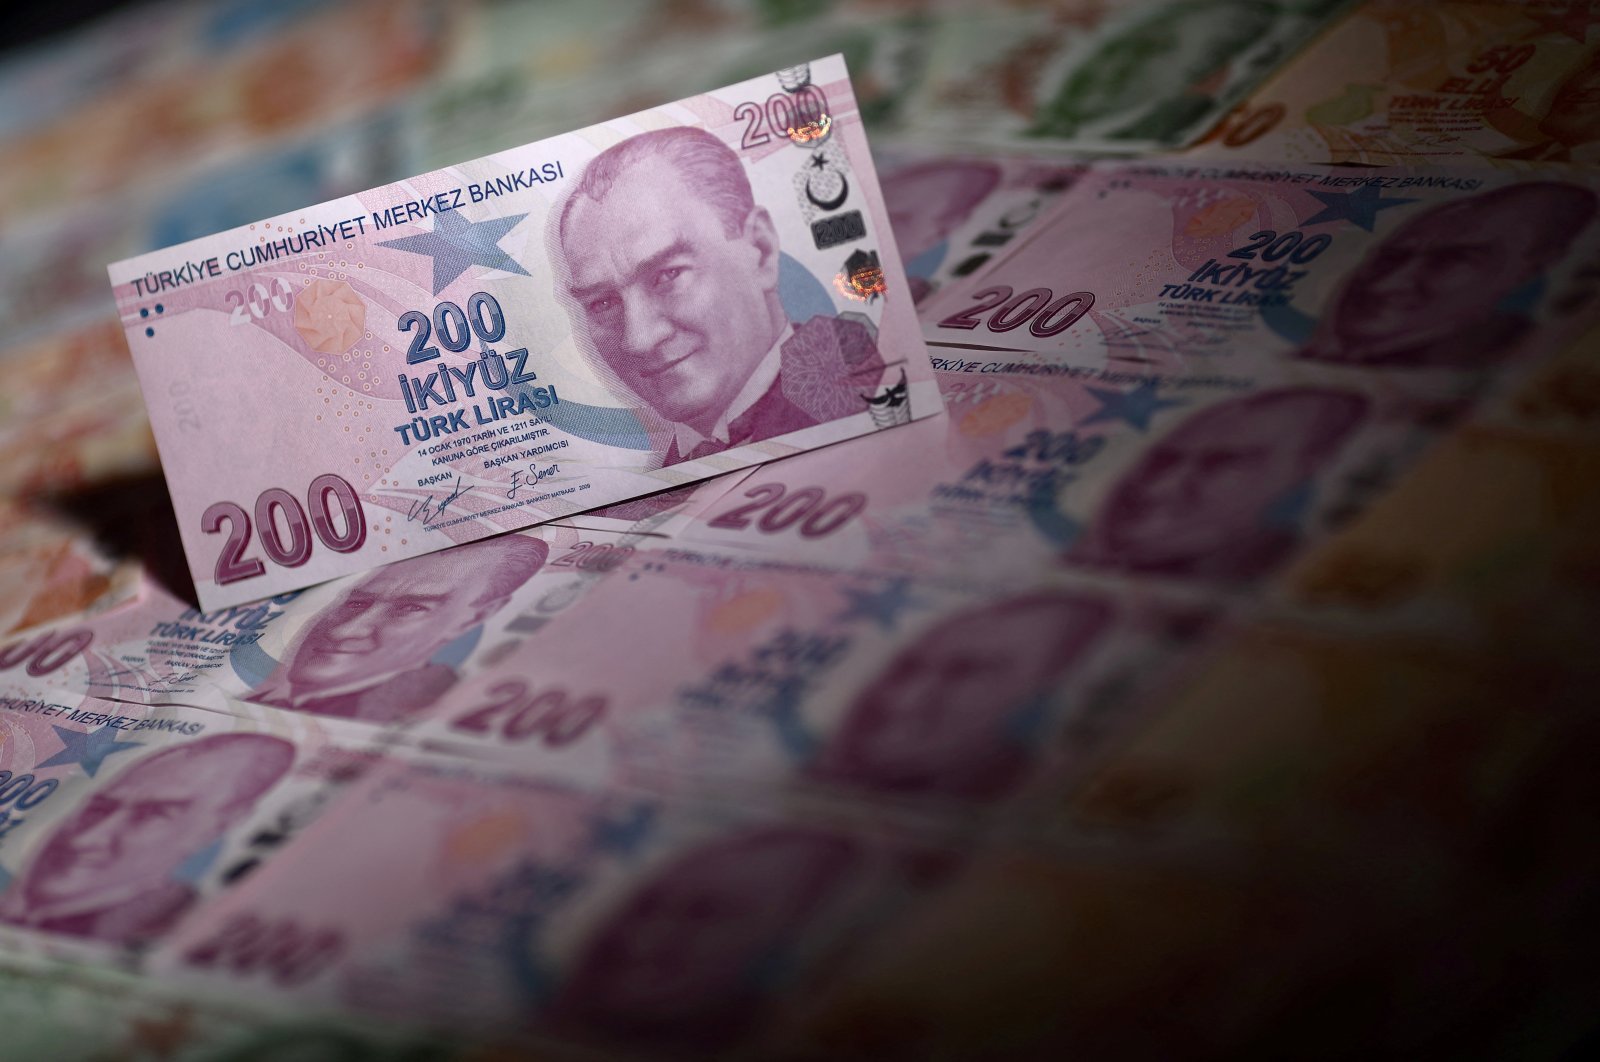 Turkish lira banknotes are seen in this illustration taken in Istanbul, Türkiye, Nov. 23, 2021. (Reuters Photo)